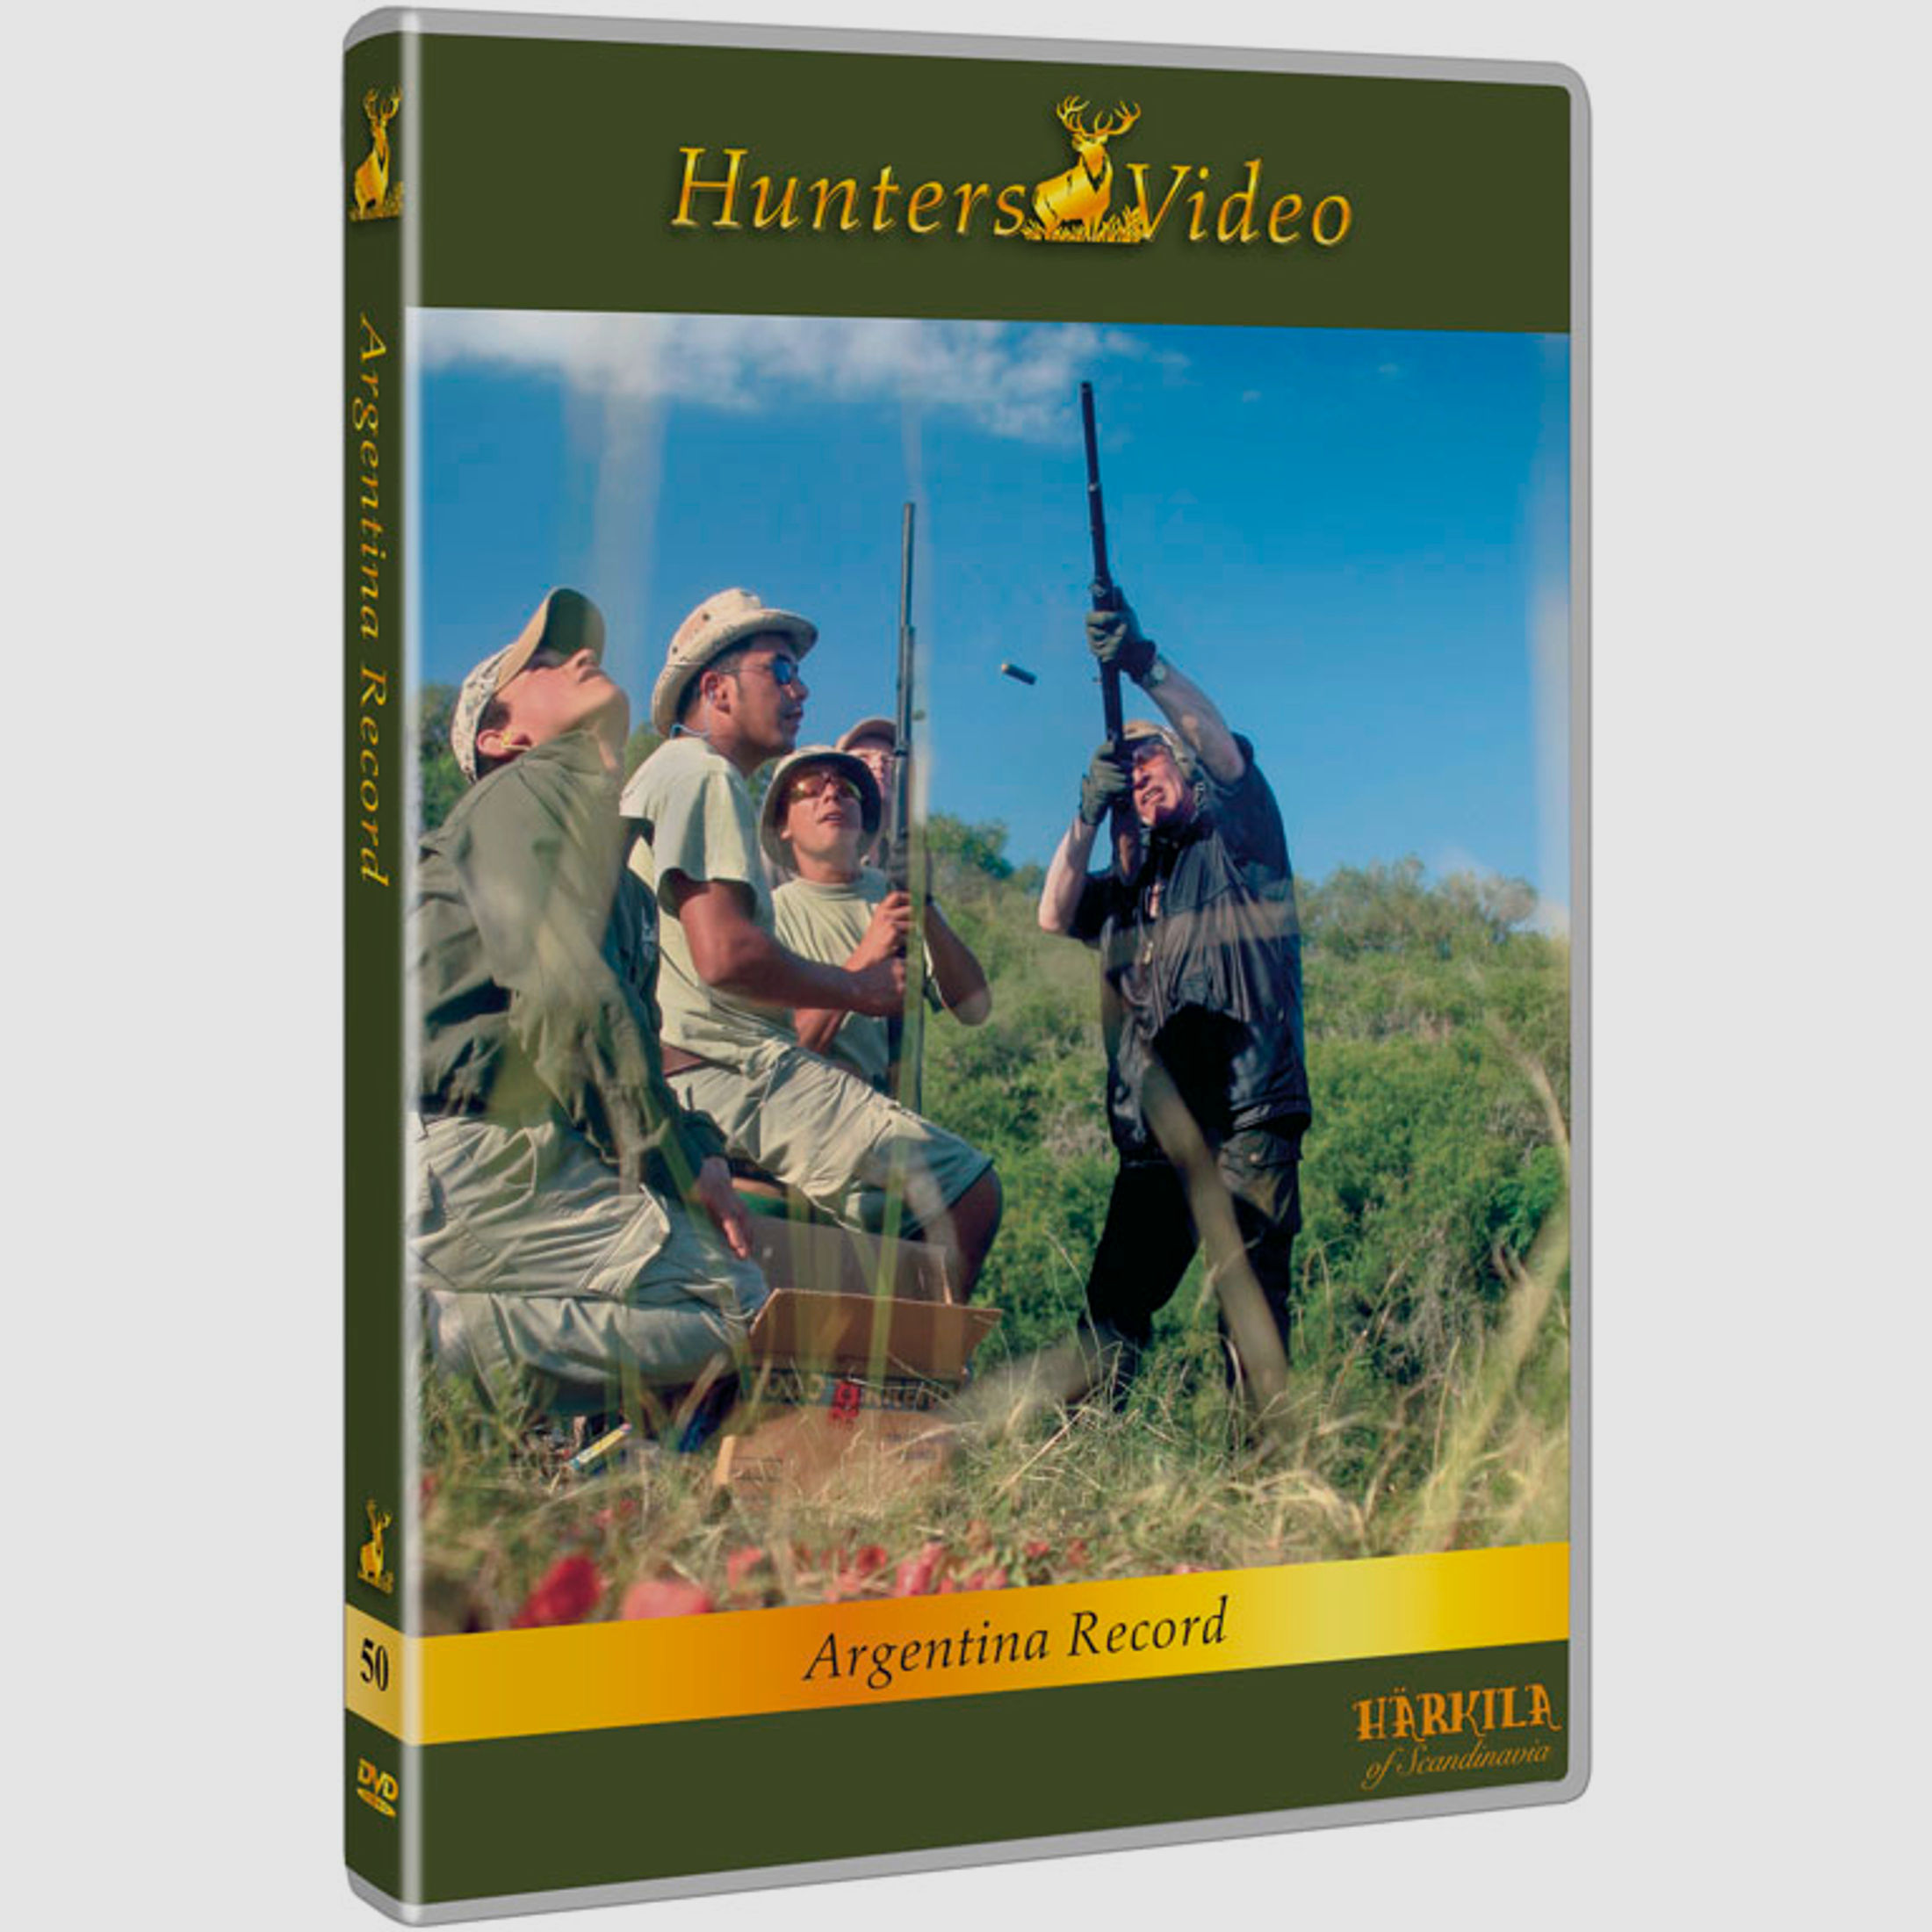 Hunters Video - DVD Argentina Record